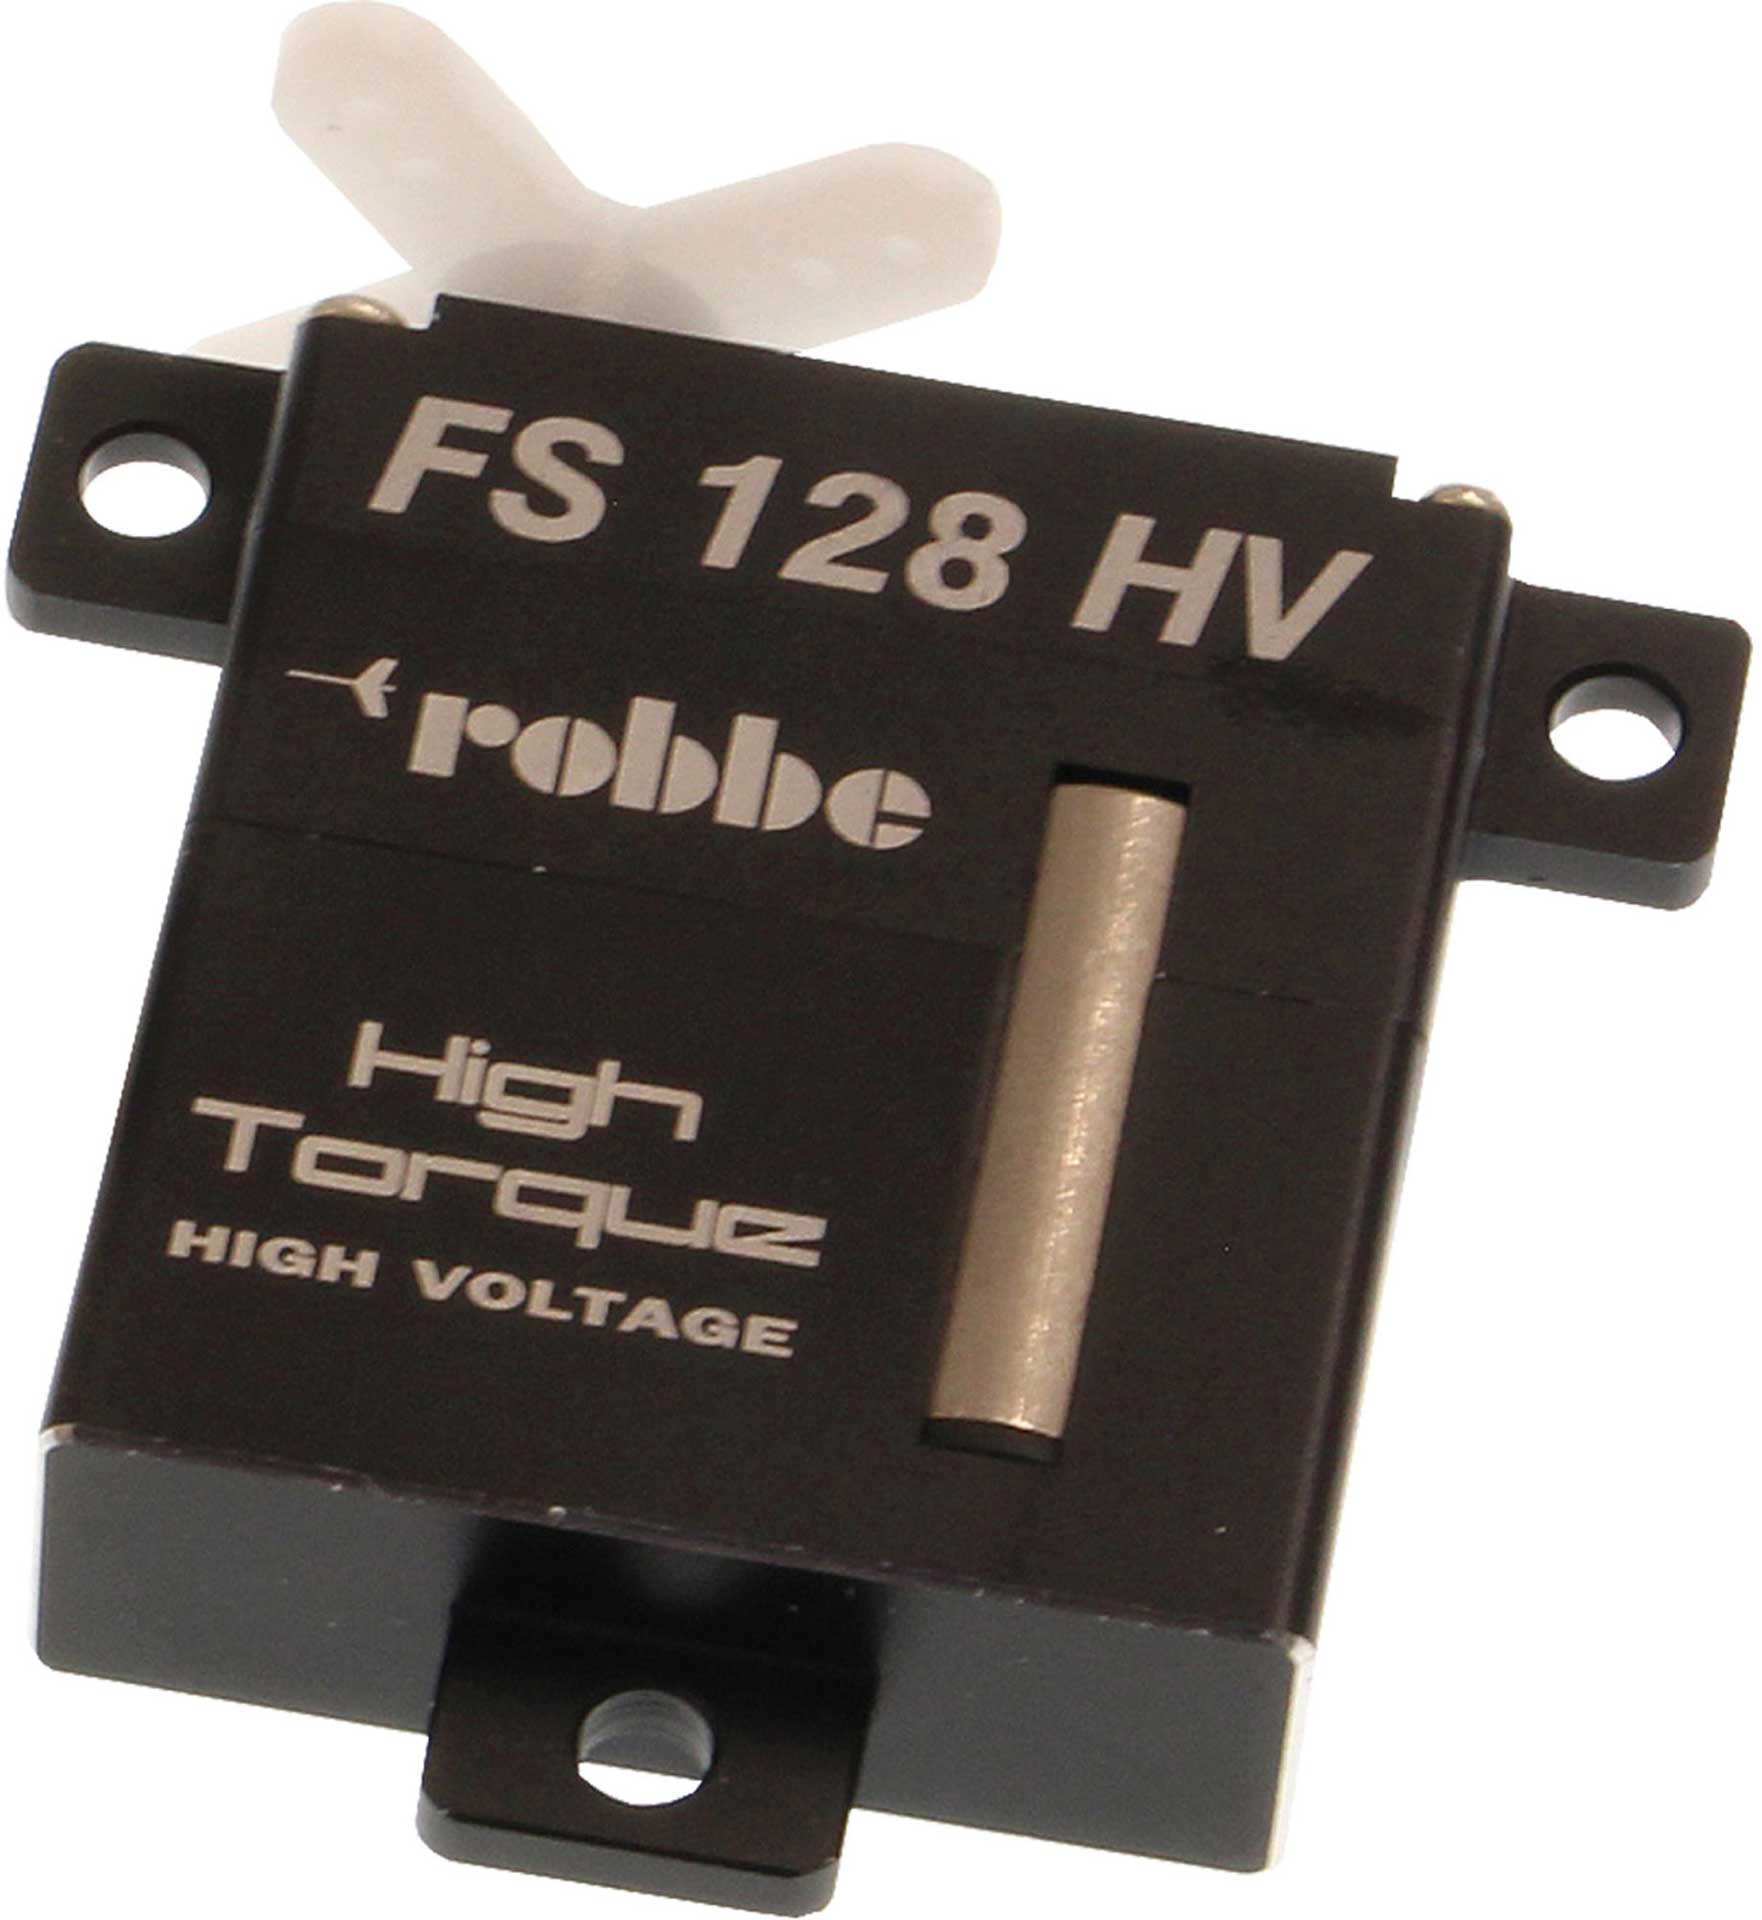 Robbe Modellsport FS 128 BB MG HV DIGITAL SERVO ( montage compatible avec X10 )